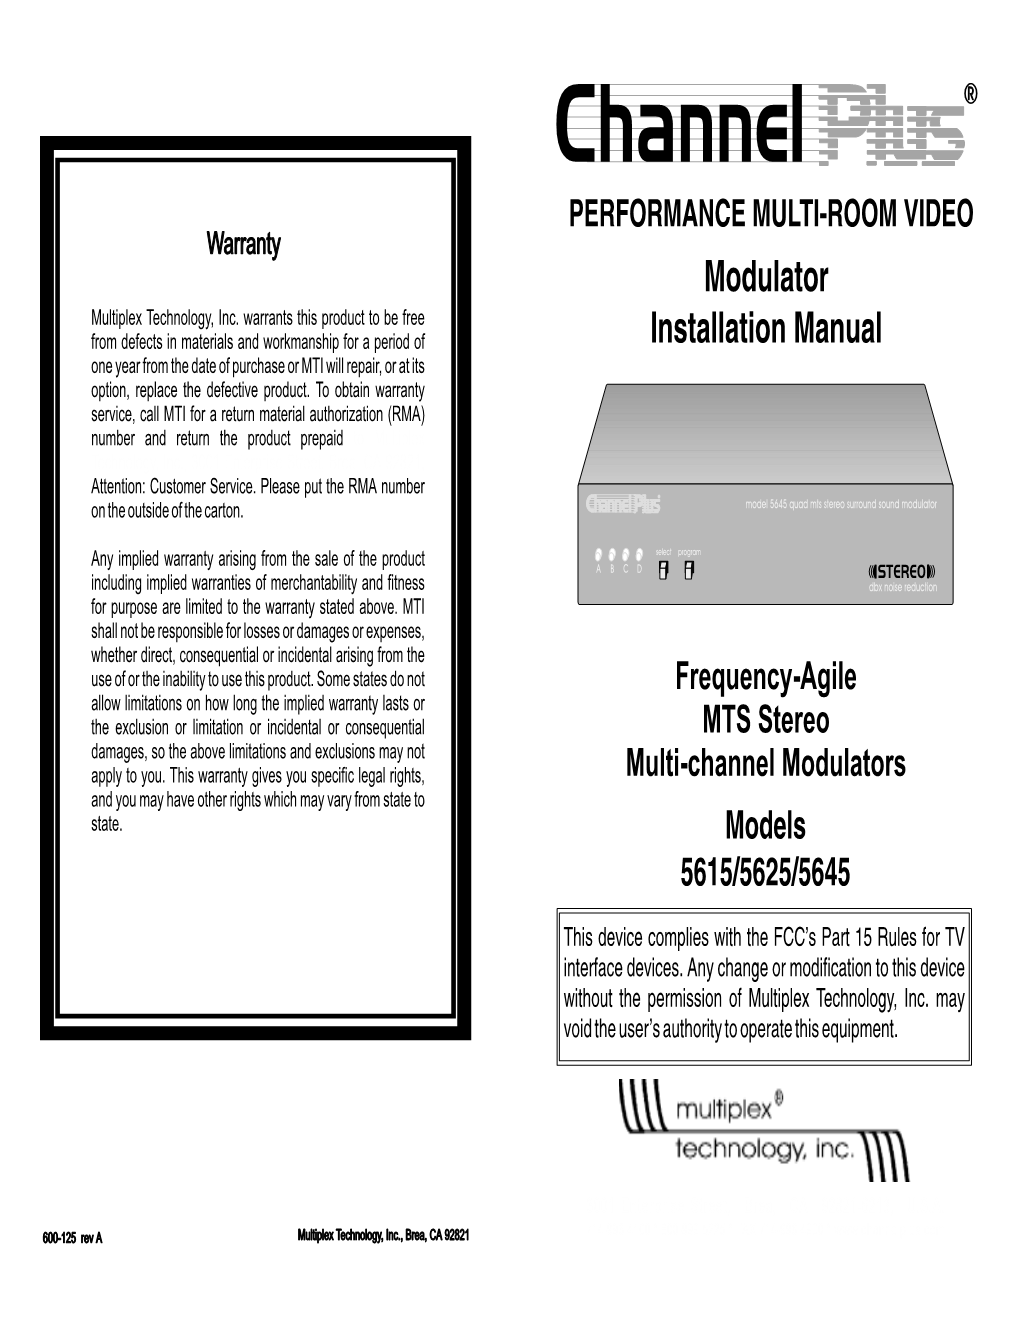 Channel R PERFORMANCE MULTI-ROOM VIDEO Warranty Modulator Multiplex Technology, Inc